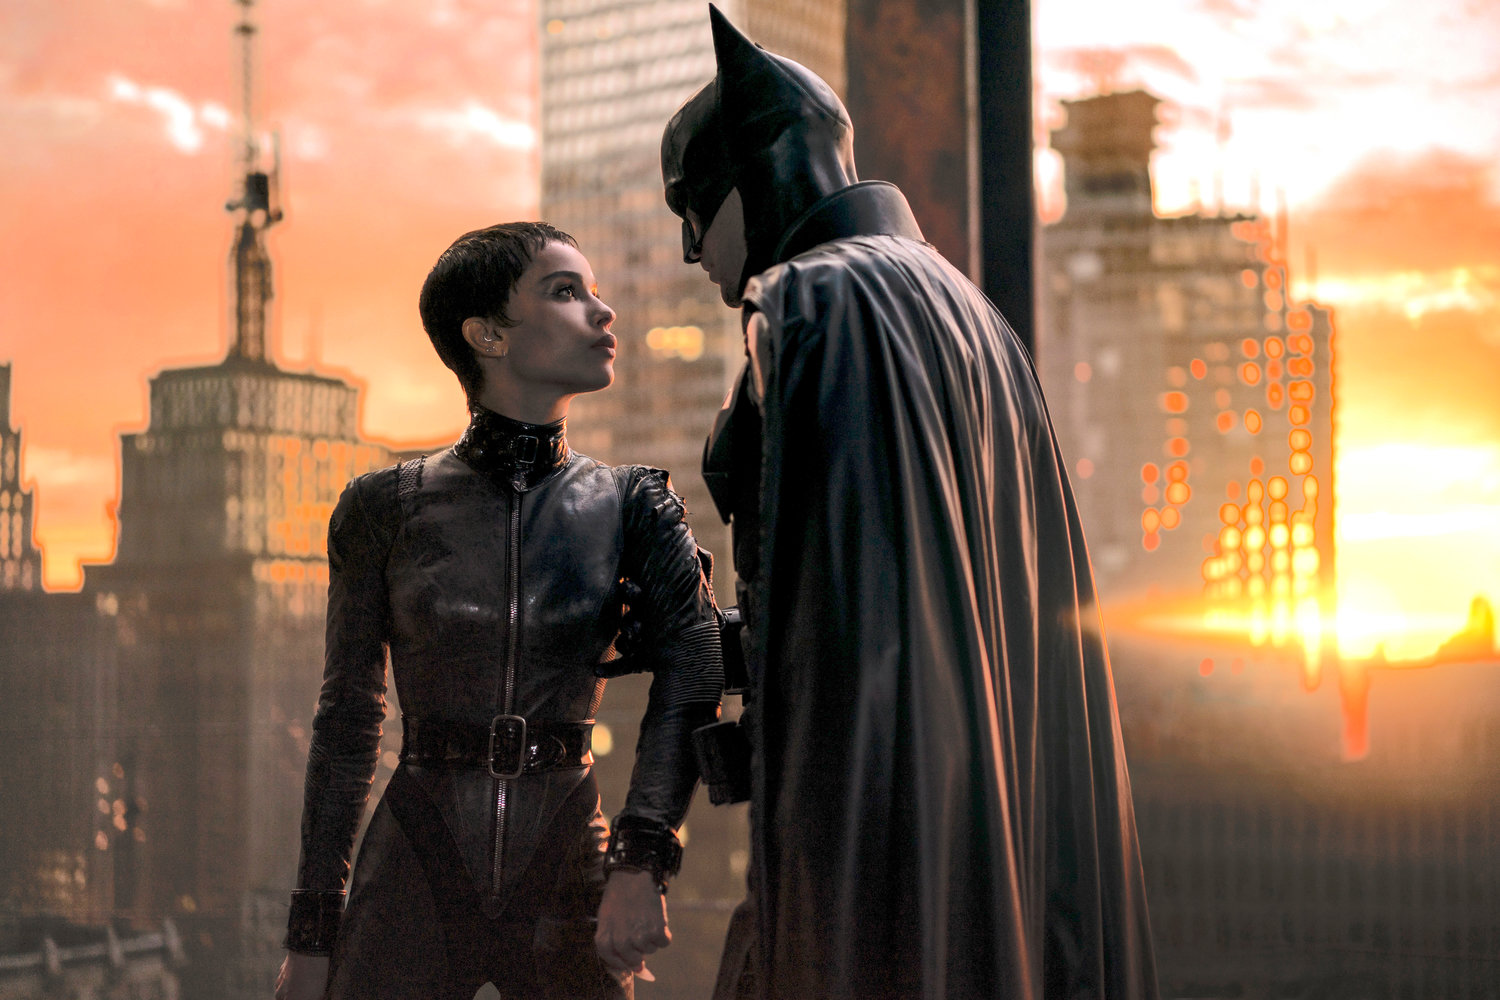 Grittier makeover — Zoe Kravitz, left, and Robert Pattinson in a scene from “The Batman.”